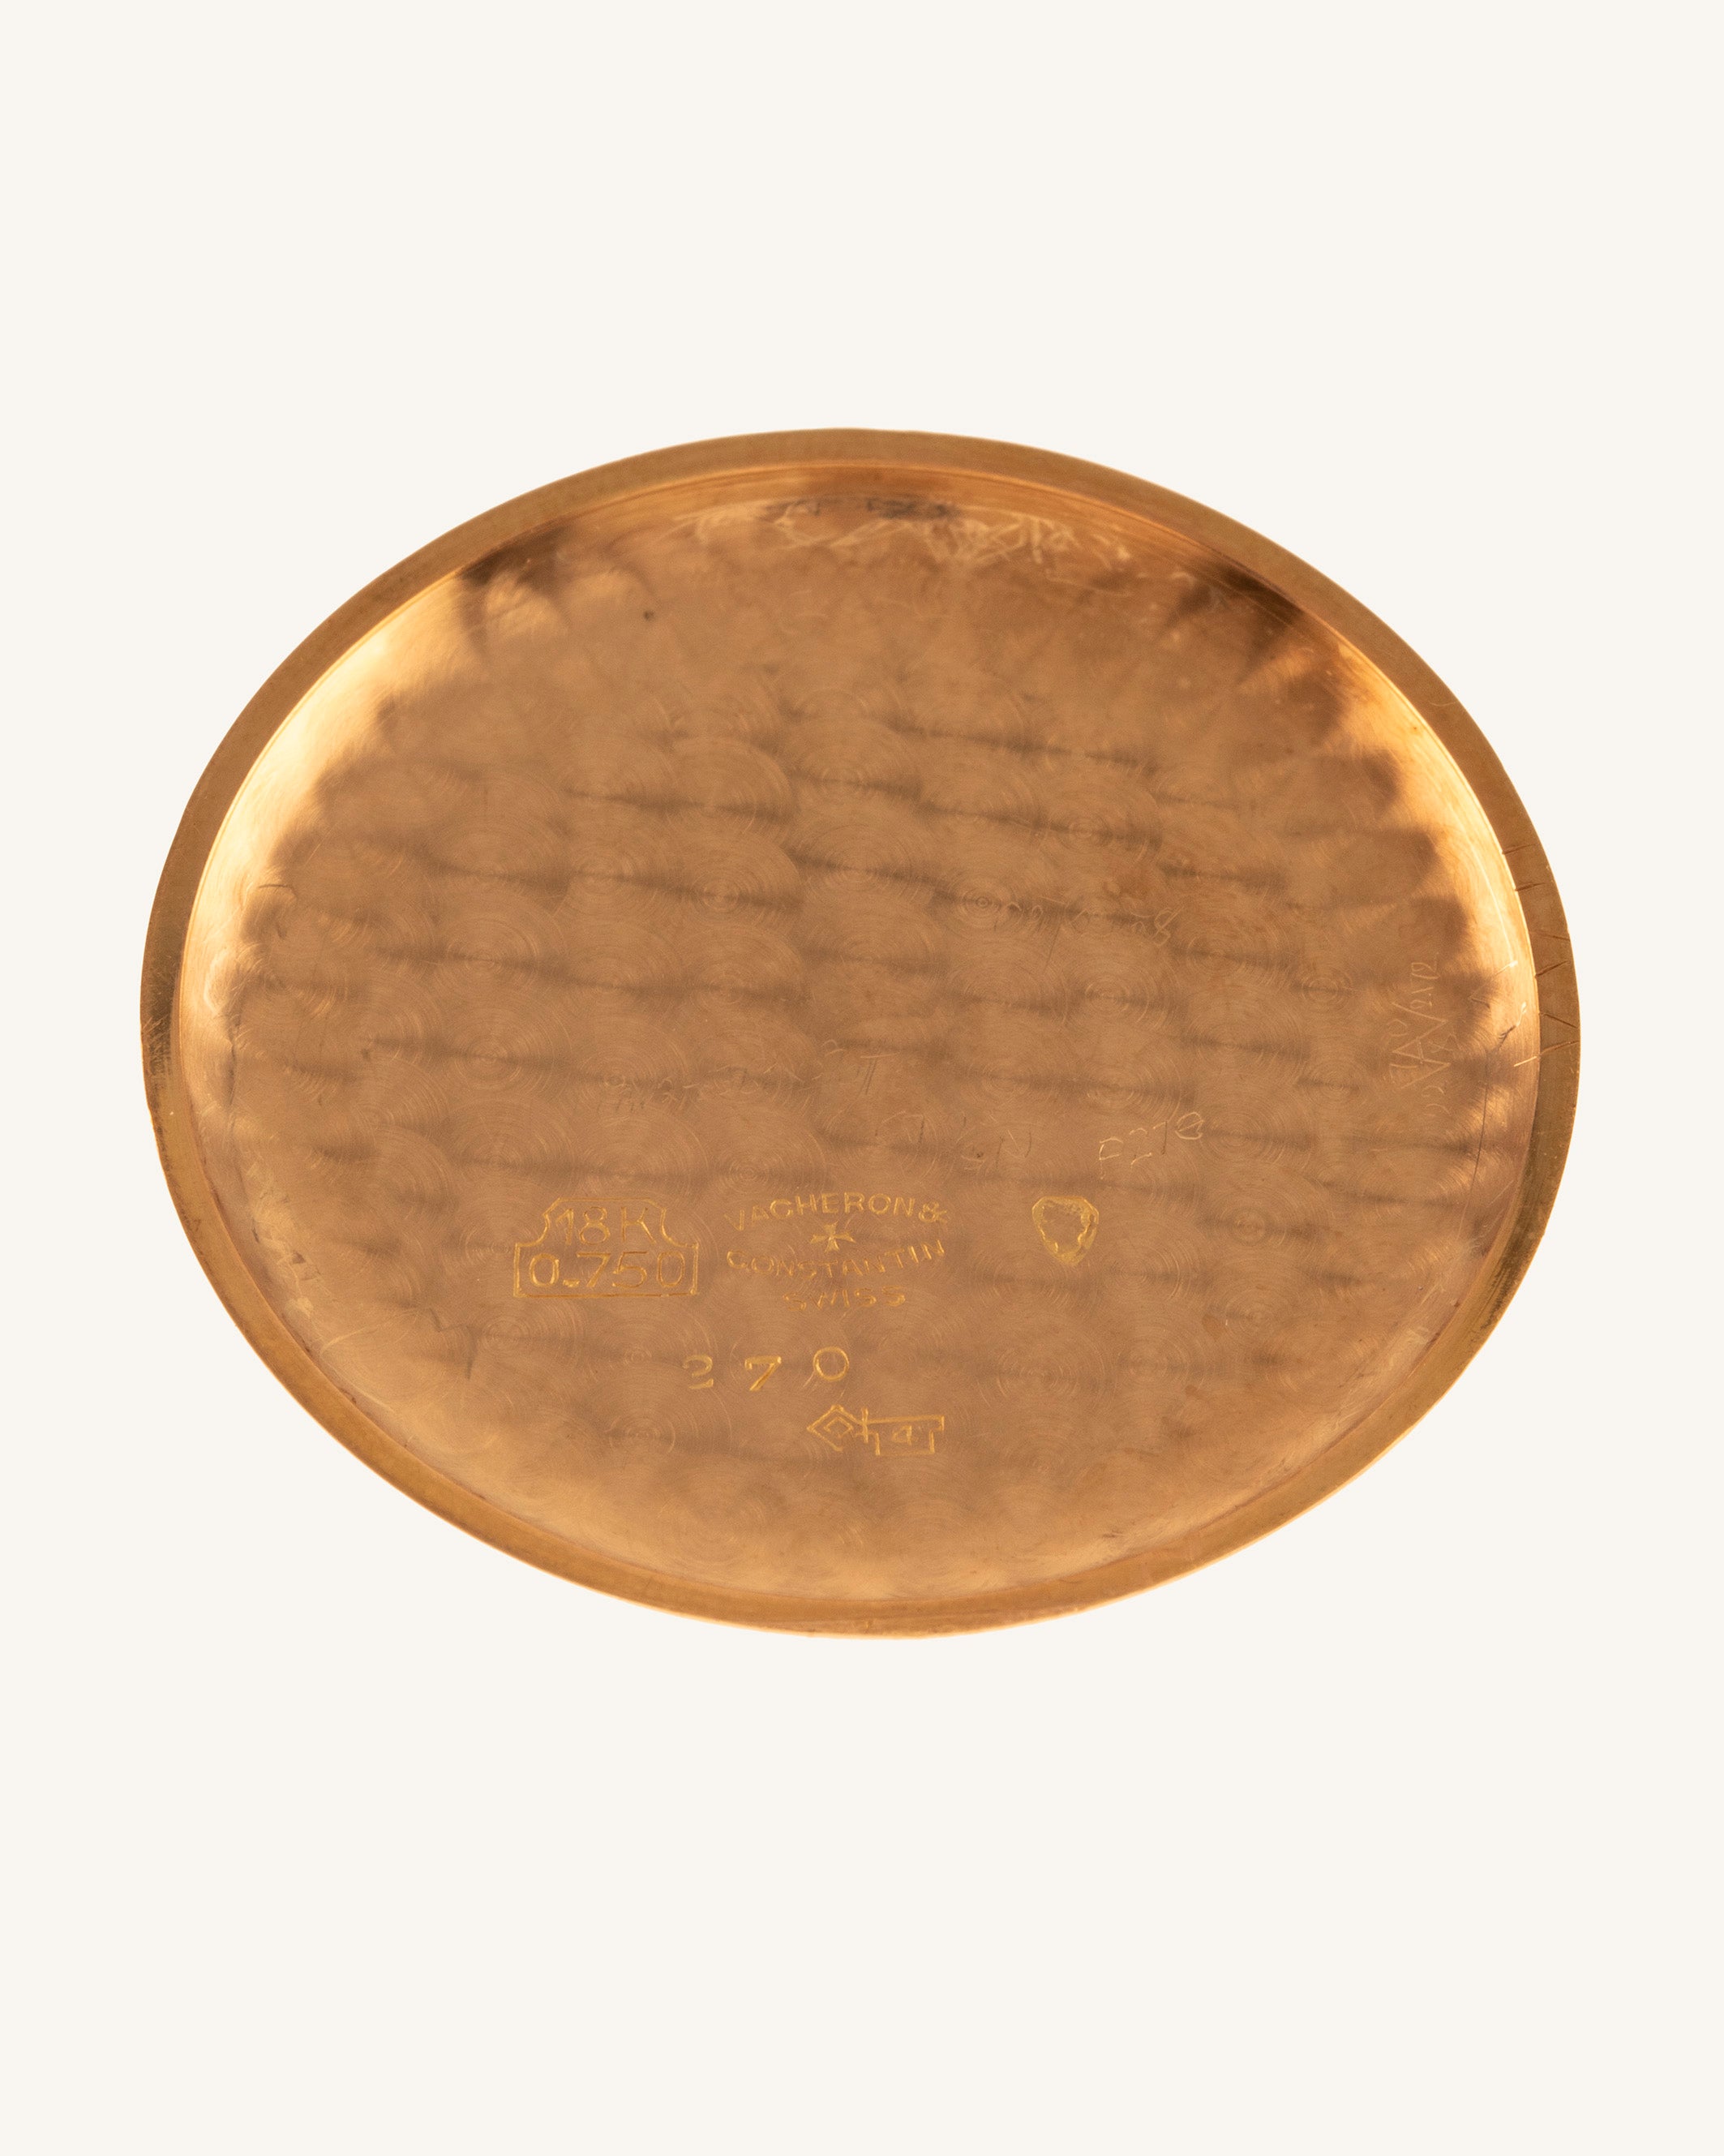 Vacheron & Constantin Chronograph Ref. 4072 rose gold